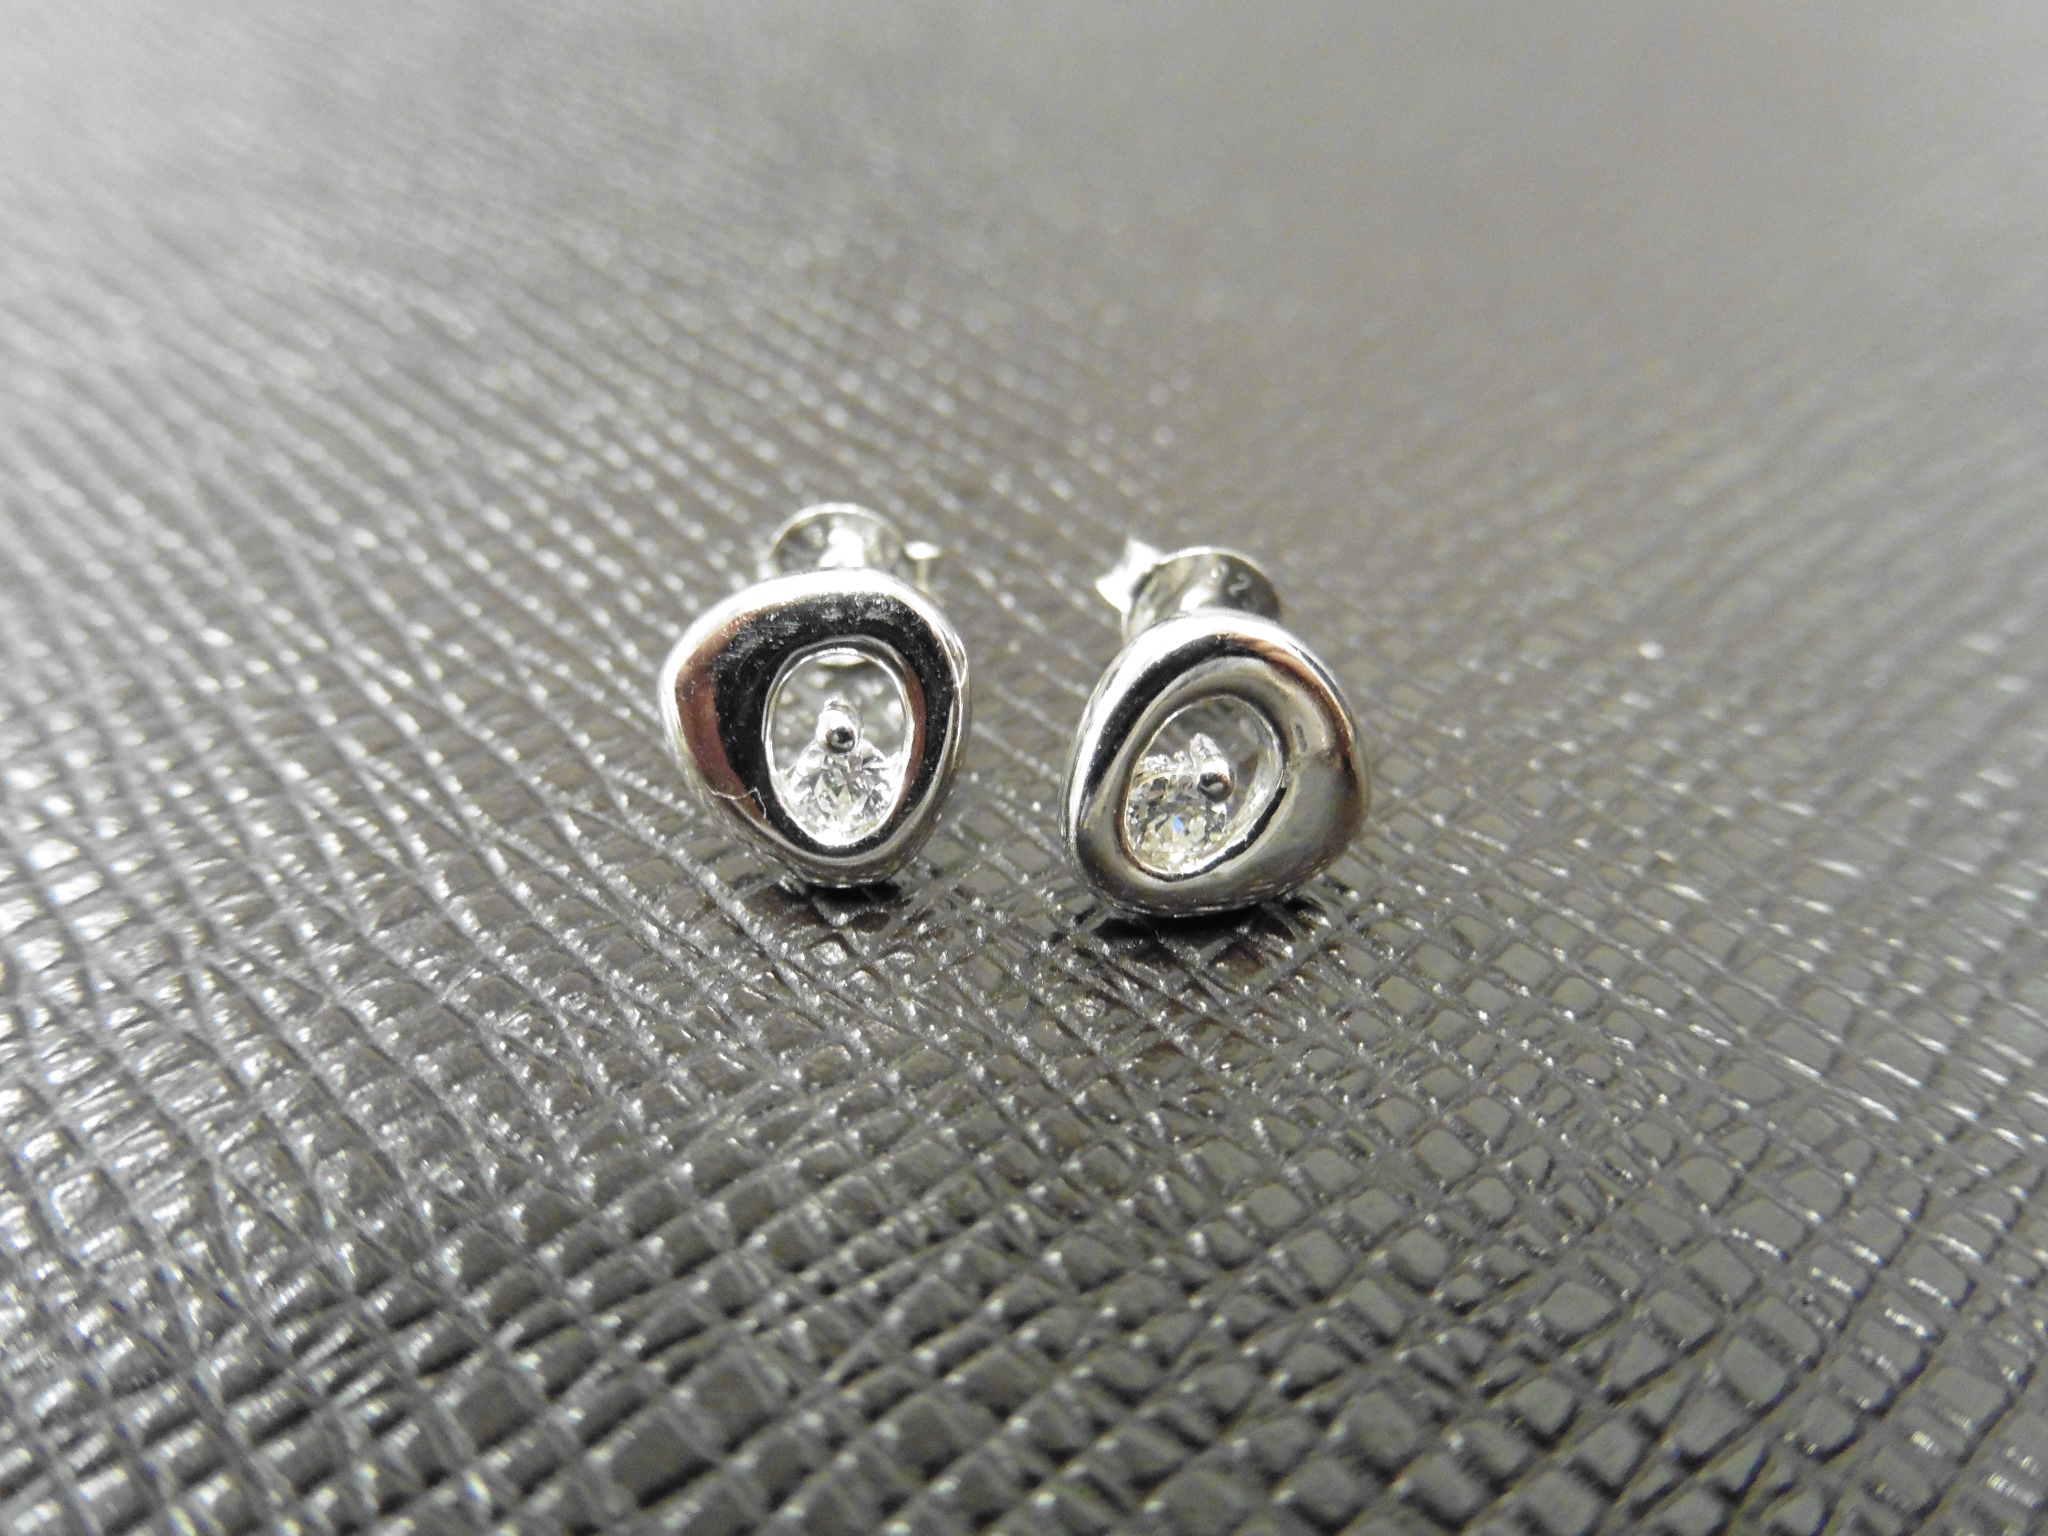 0.12ct diamond earrings set in platinum 950. 2 small brilliant cut diamonds, H/I colourand si2